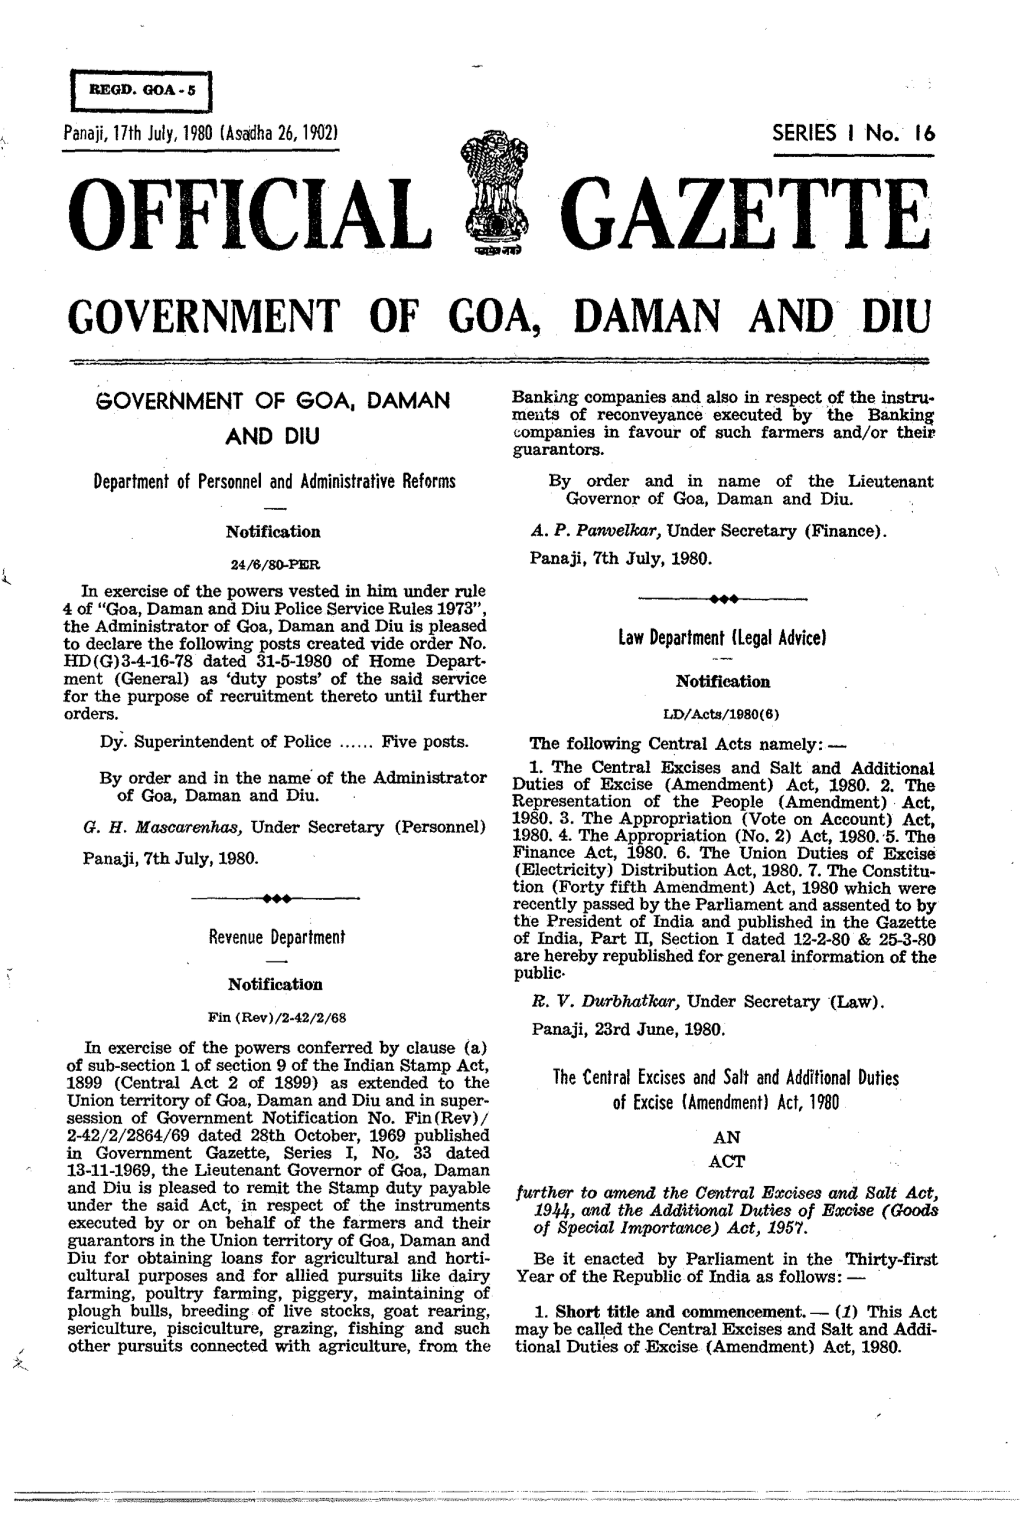 Official Gazette Government of Goa, Daman and Diu